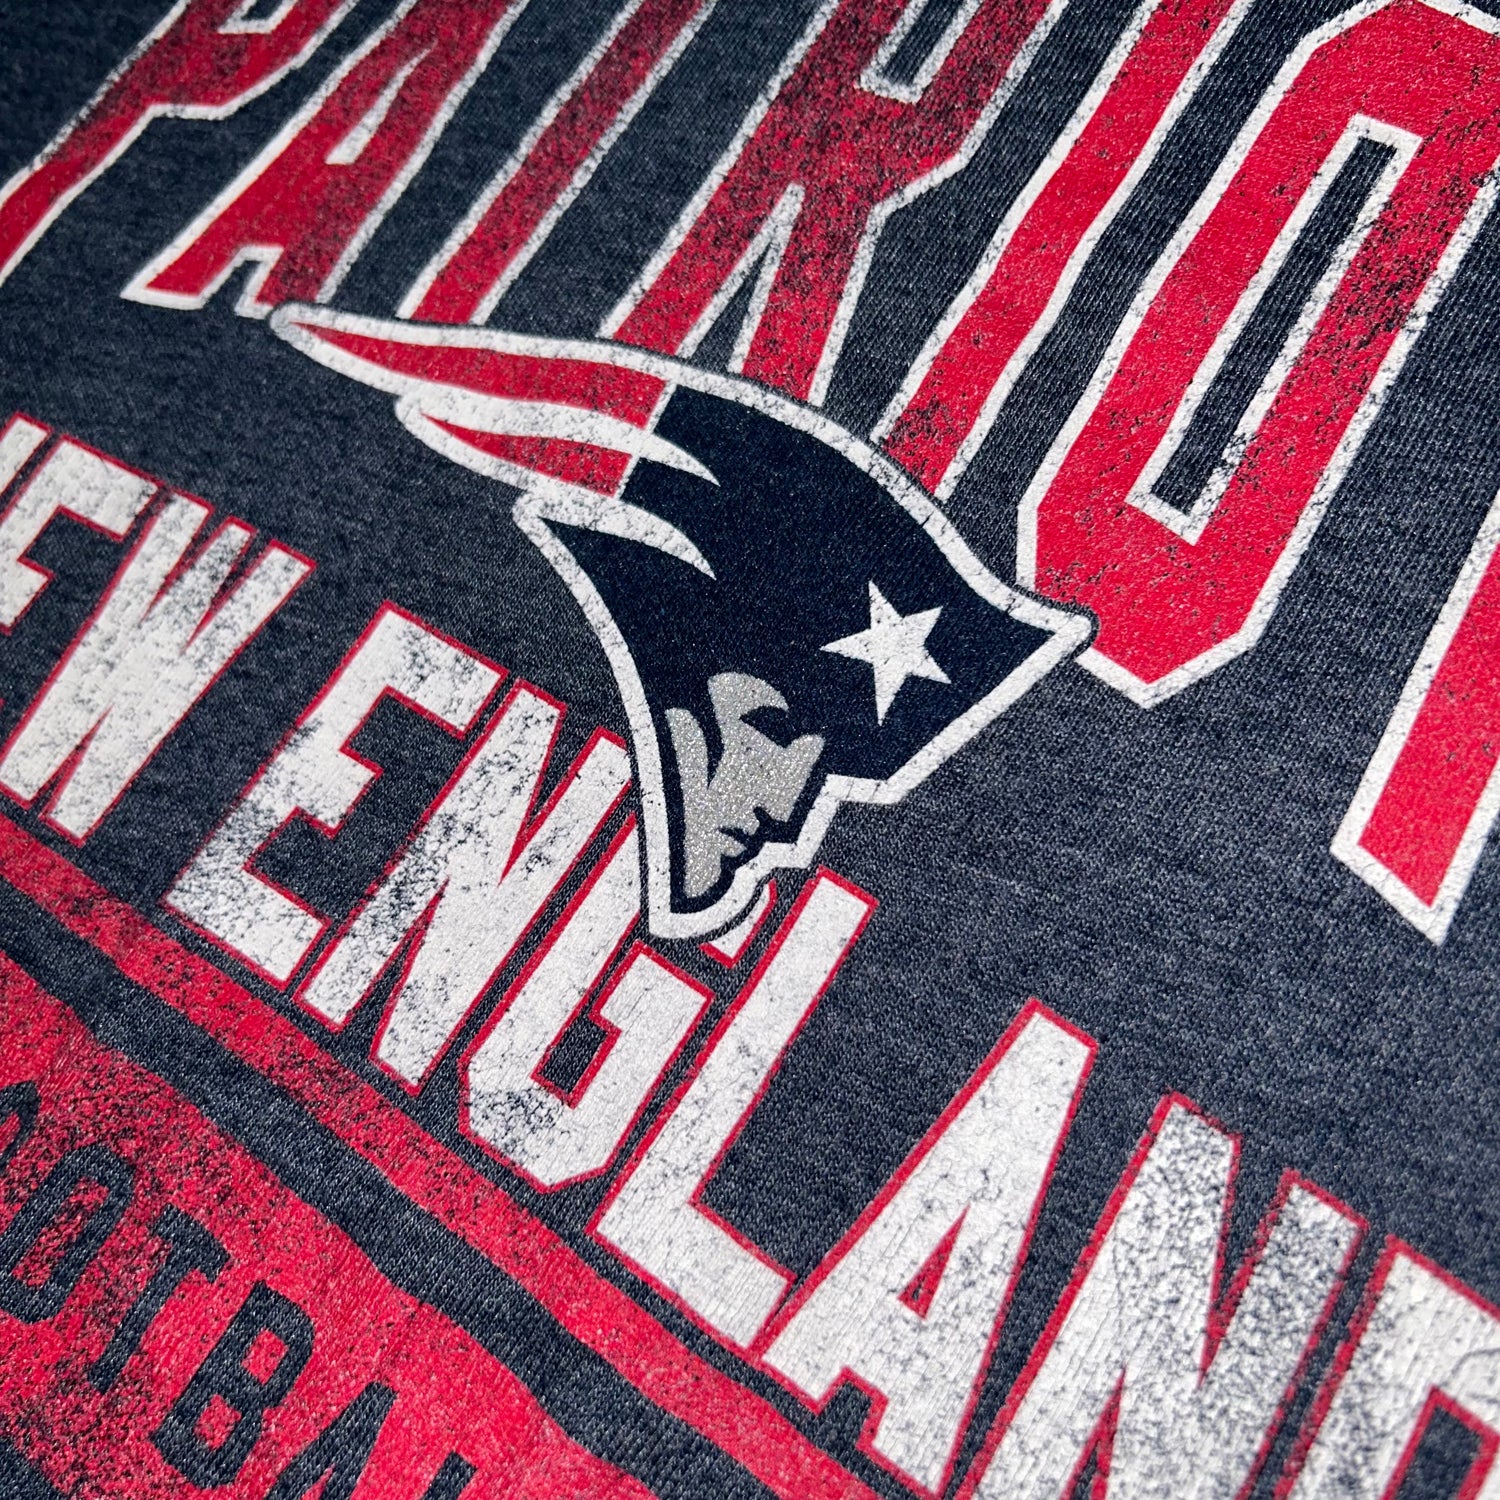 T-shirt New England Patriots NFL (M)